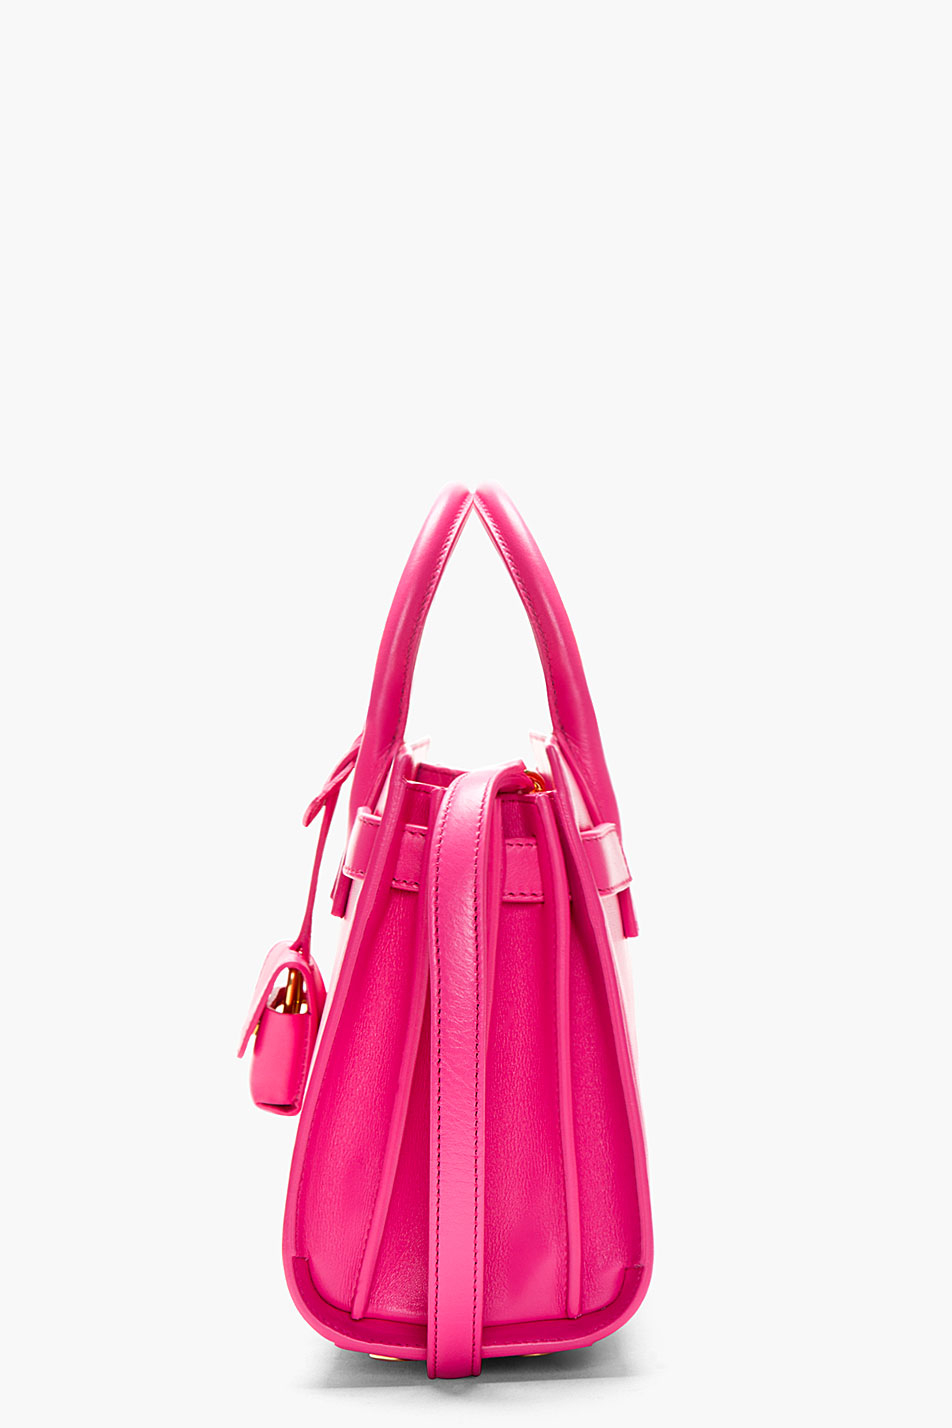 Lyst - Saint Laurent Pink Calfskin Leather Sac Du Jour Mini Tote Bag in ...